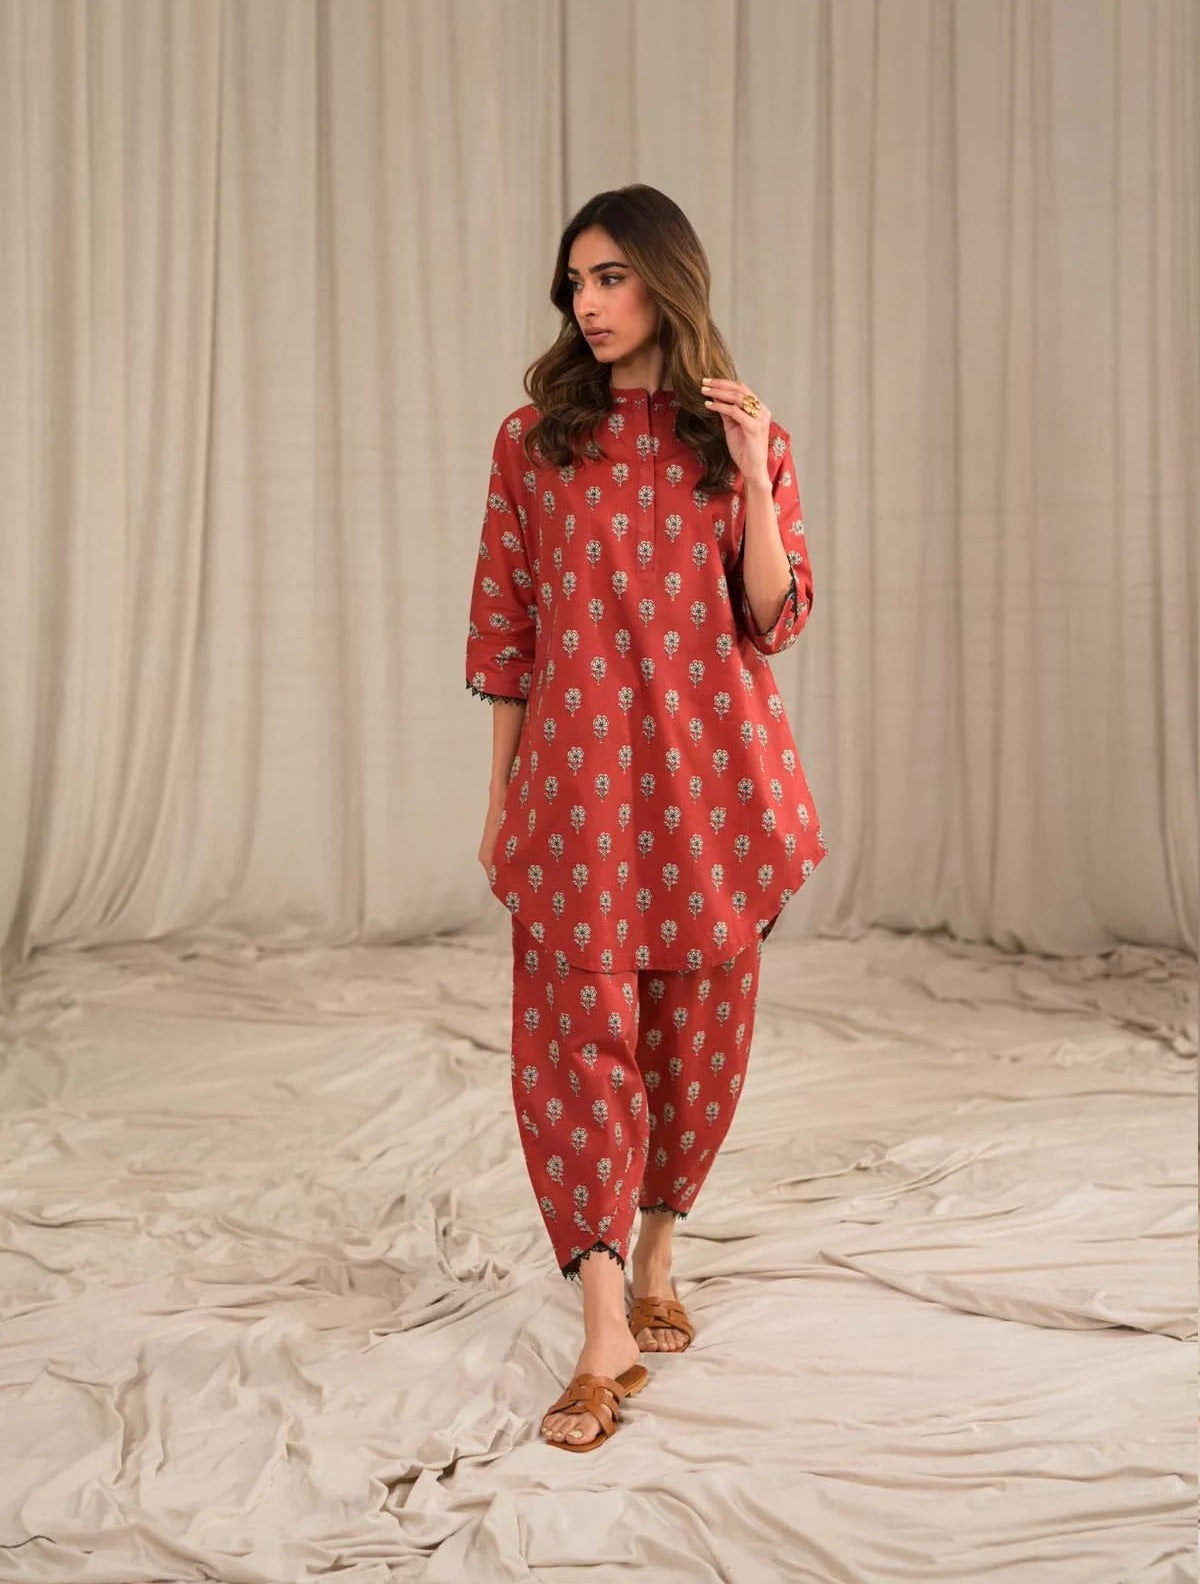 Sahar Printed Lawn Suits Unstitched 3 Piece SHR-S24-PL-V1-02 - Summer Collection